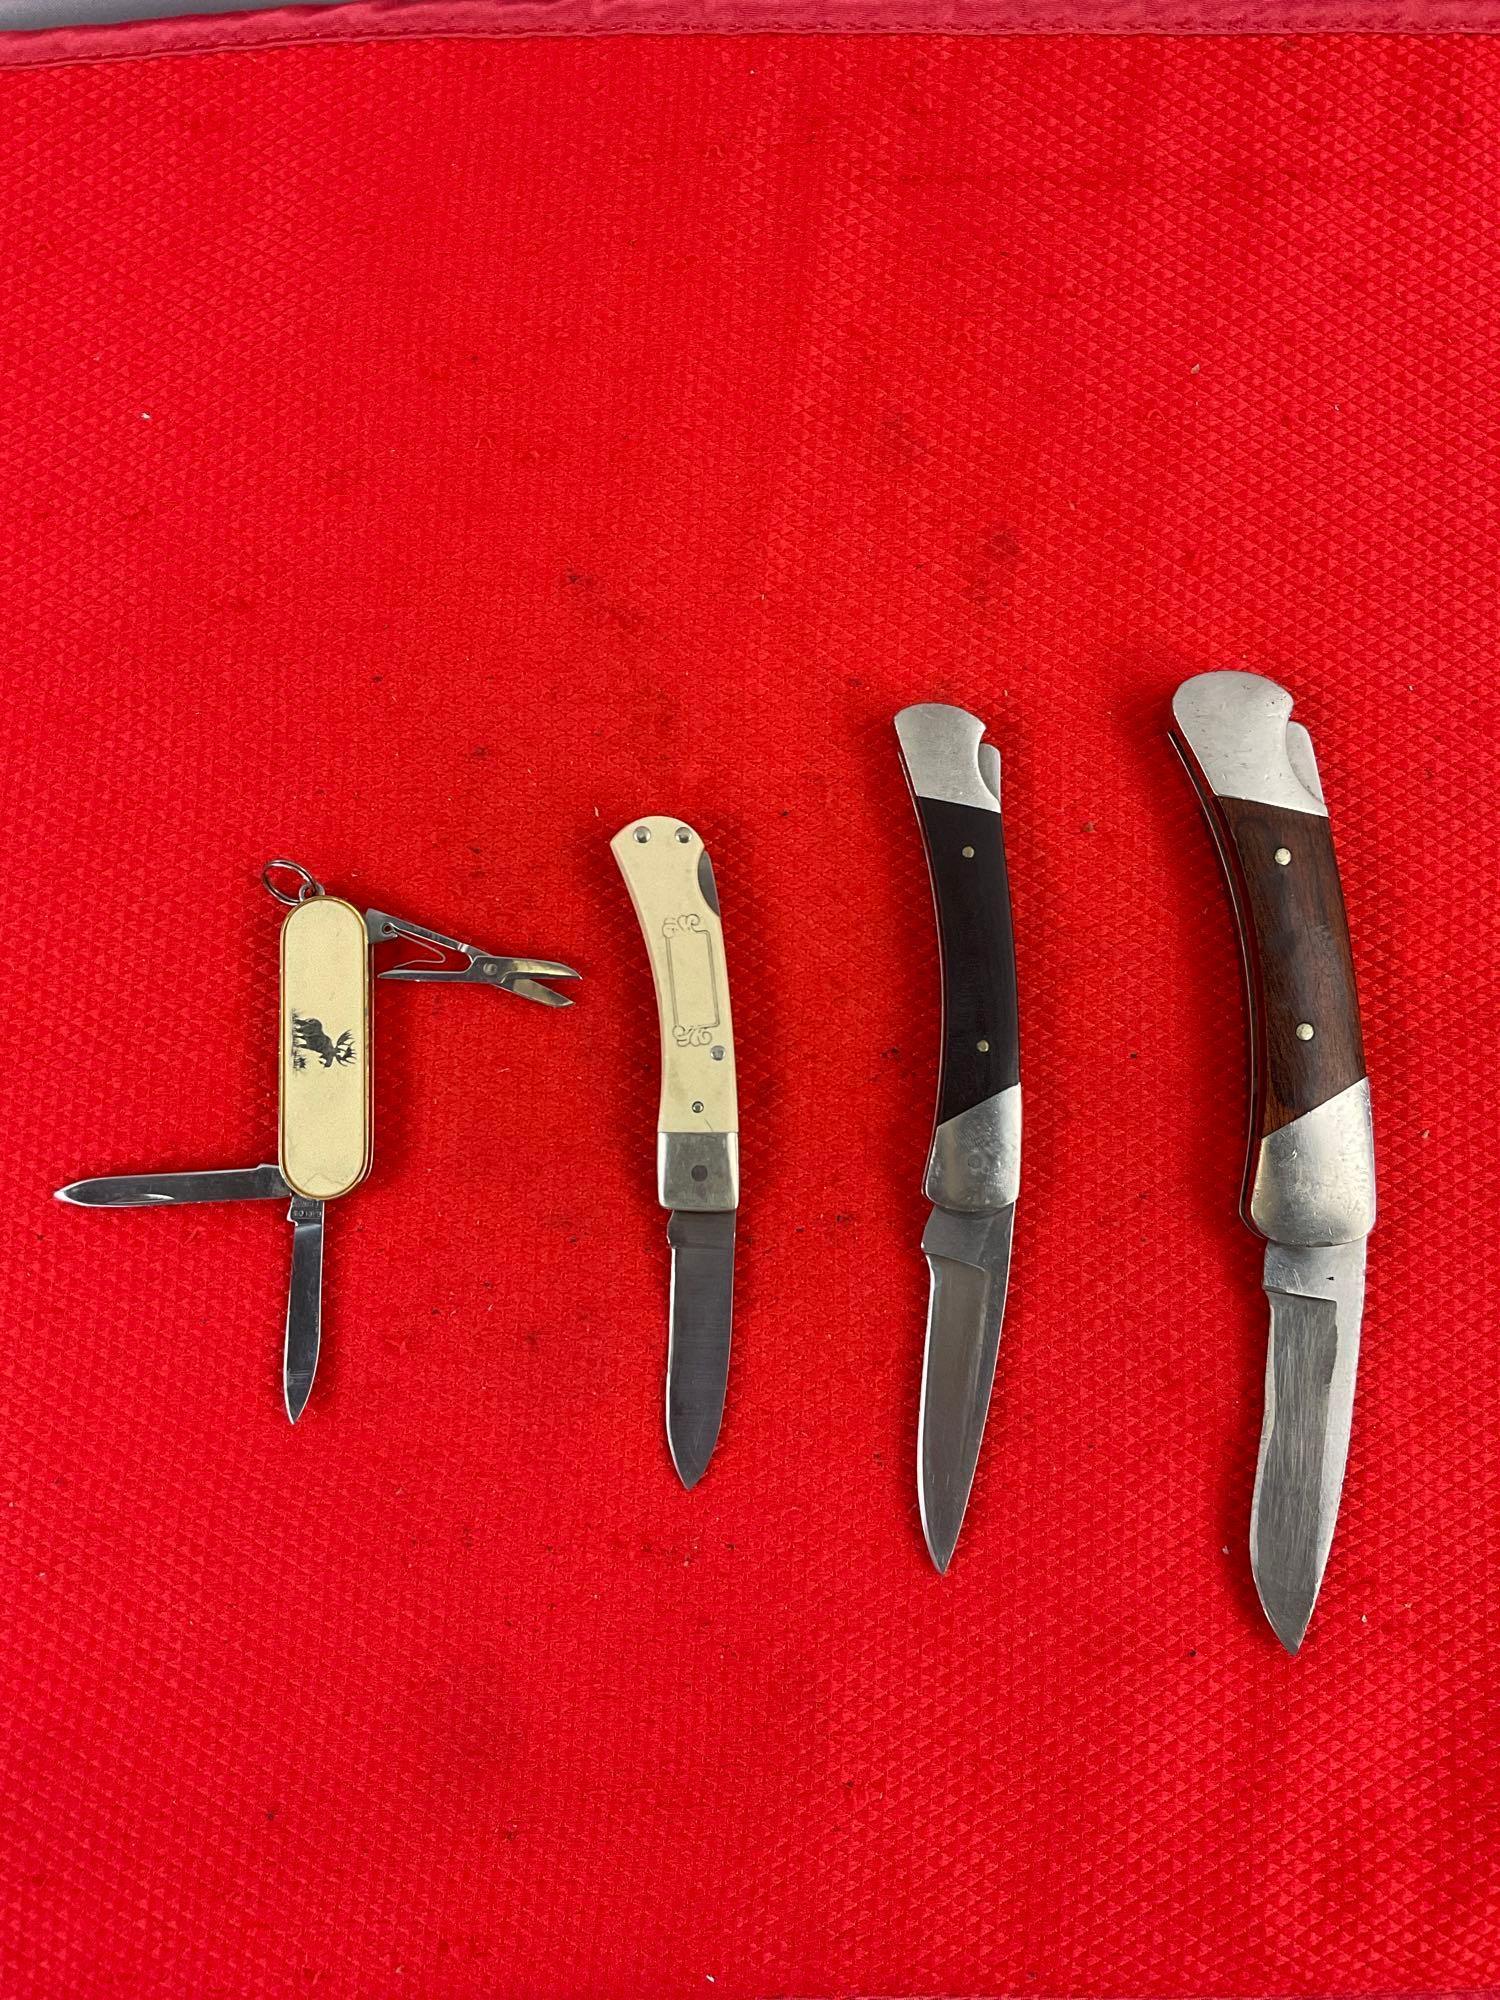 4 pcs Vintage Folding Blade Pocket Knife Assortment, 2x Buck, 1x Schrade Scrimshaw & 1 Barlow. See